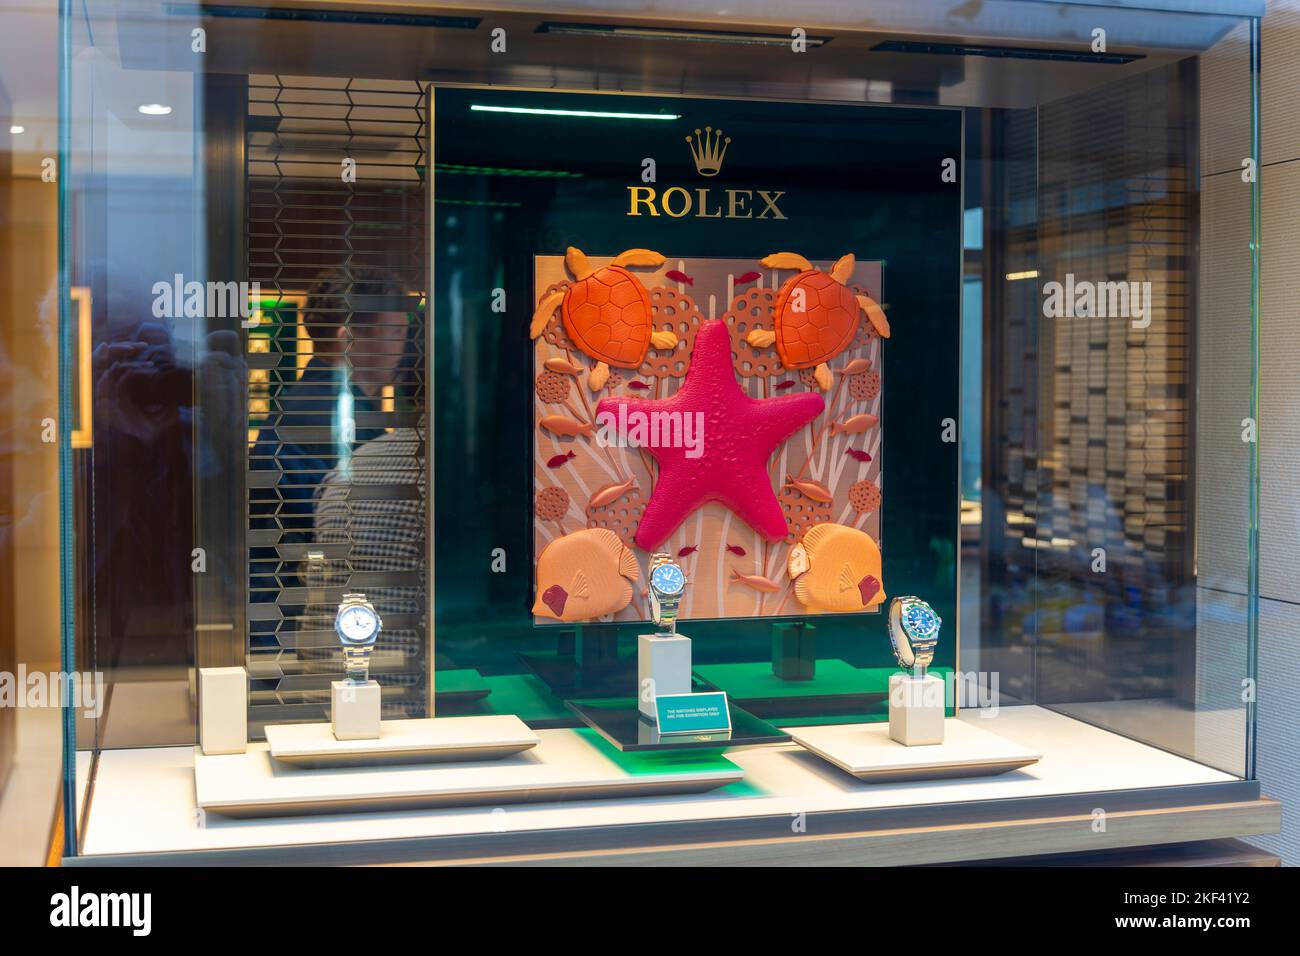 Rolex shop window display, Robert Gatward jewellers, Ipswich, Suffolk, England, UK Stock Photo